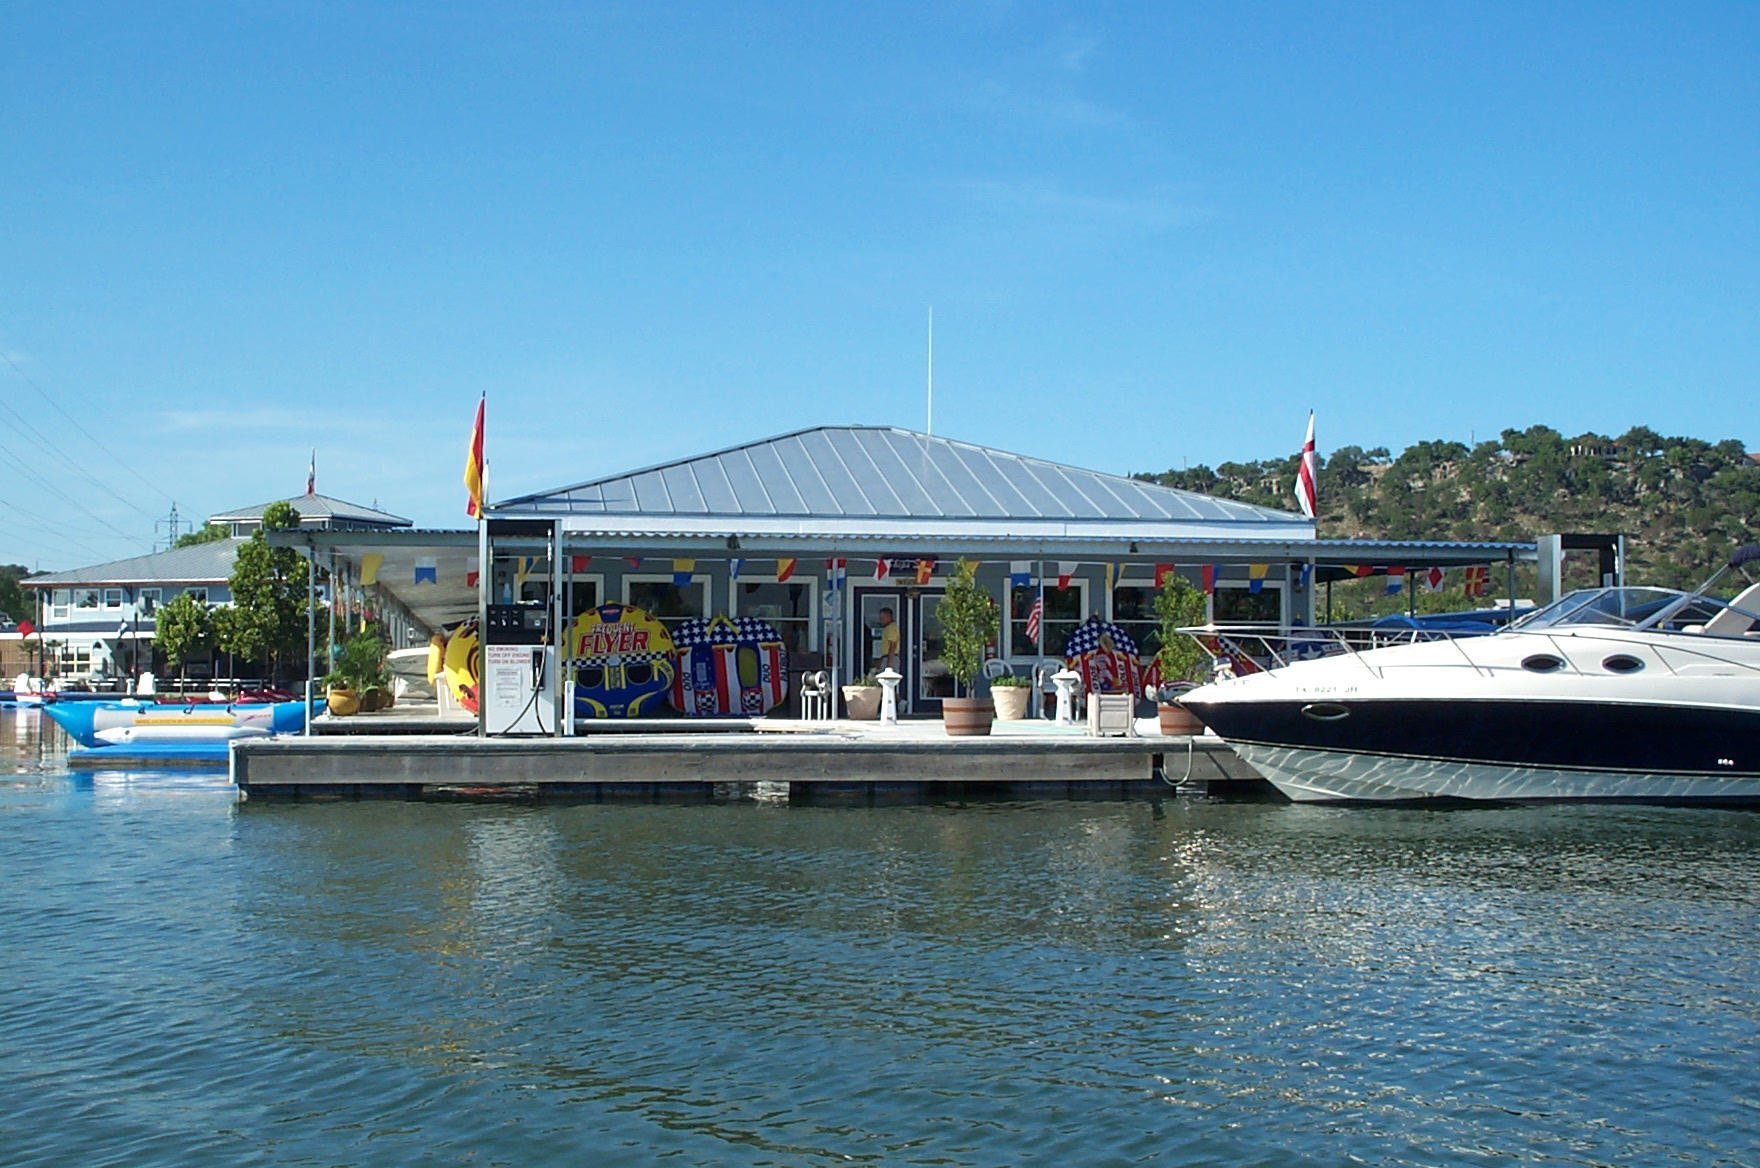 Lake LBJ Marina & Yacht Club.